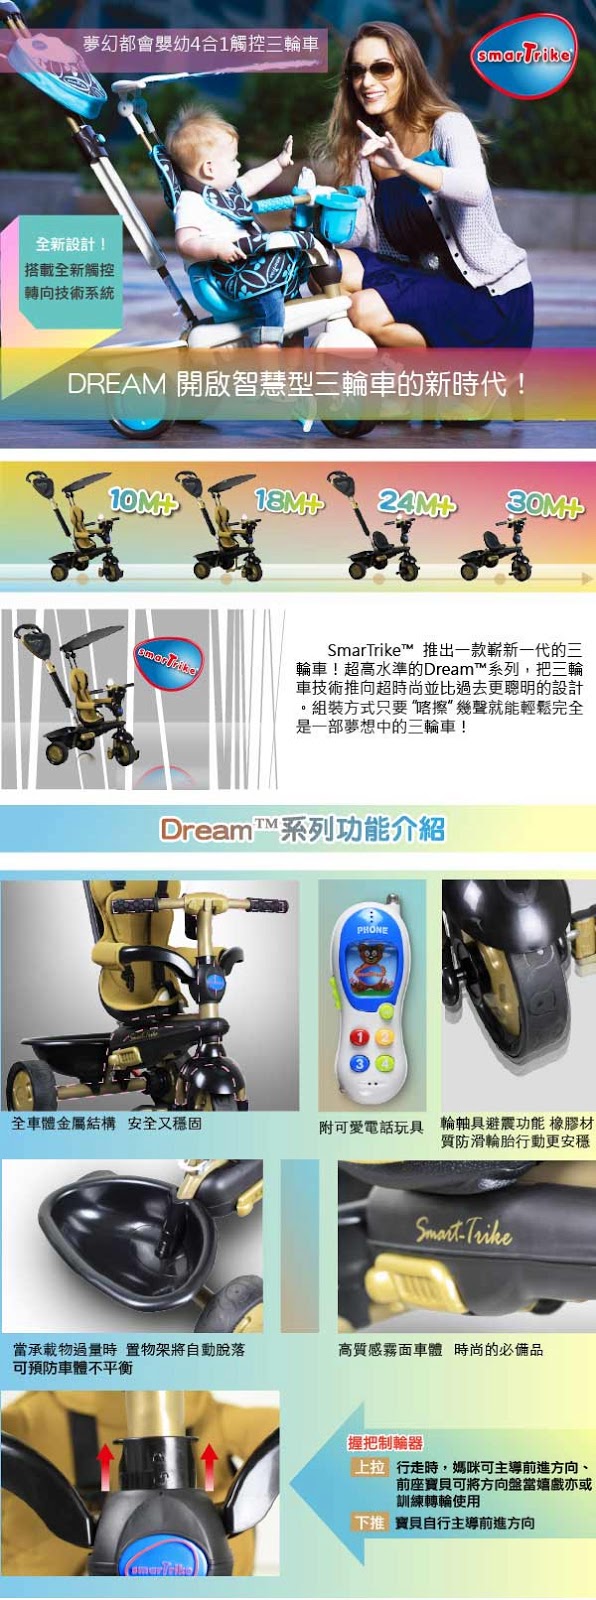 smar-trike Dream 開啟智慧型三輪車的新時代！